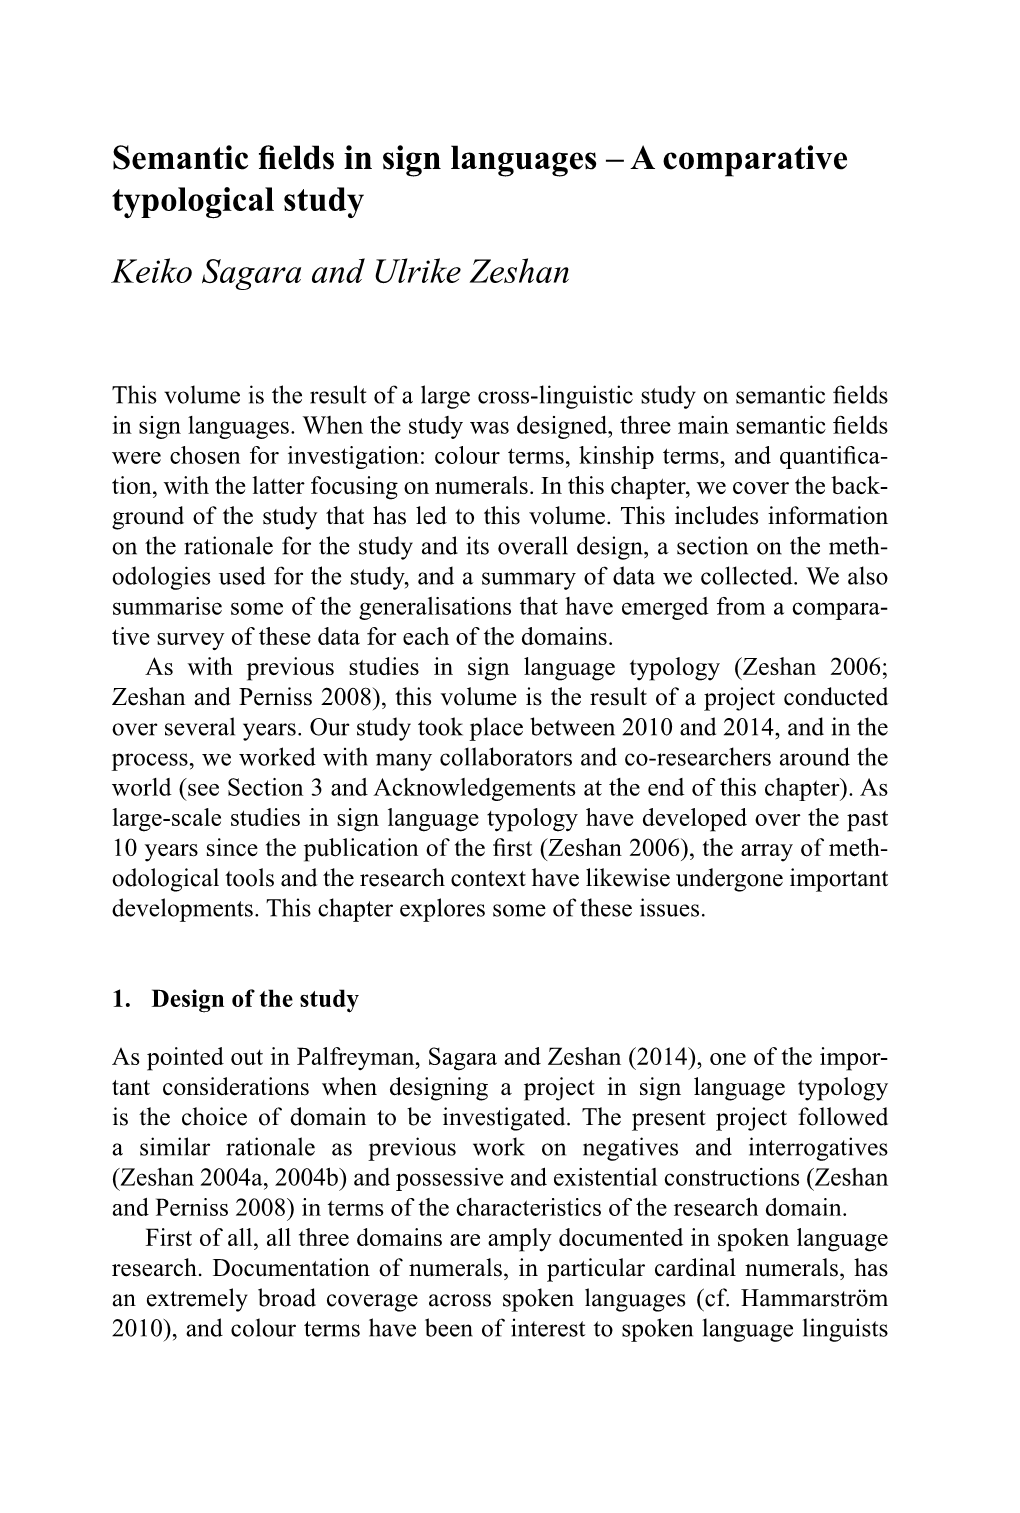 A Comparative Typological Study Keiko Sagara and Ulrike Zeshan